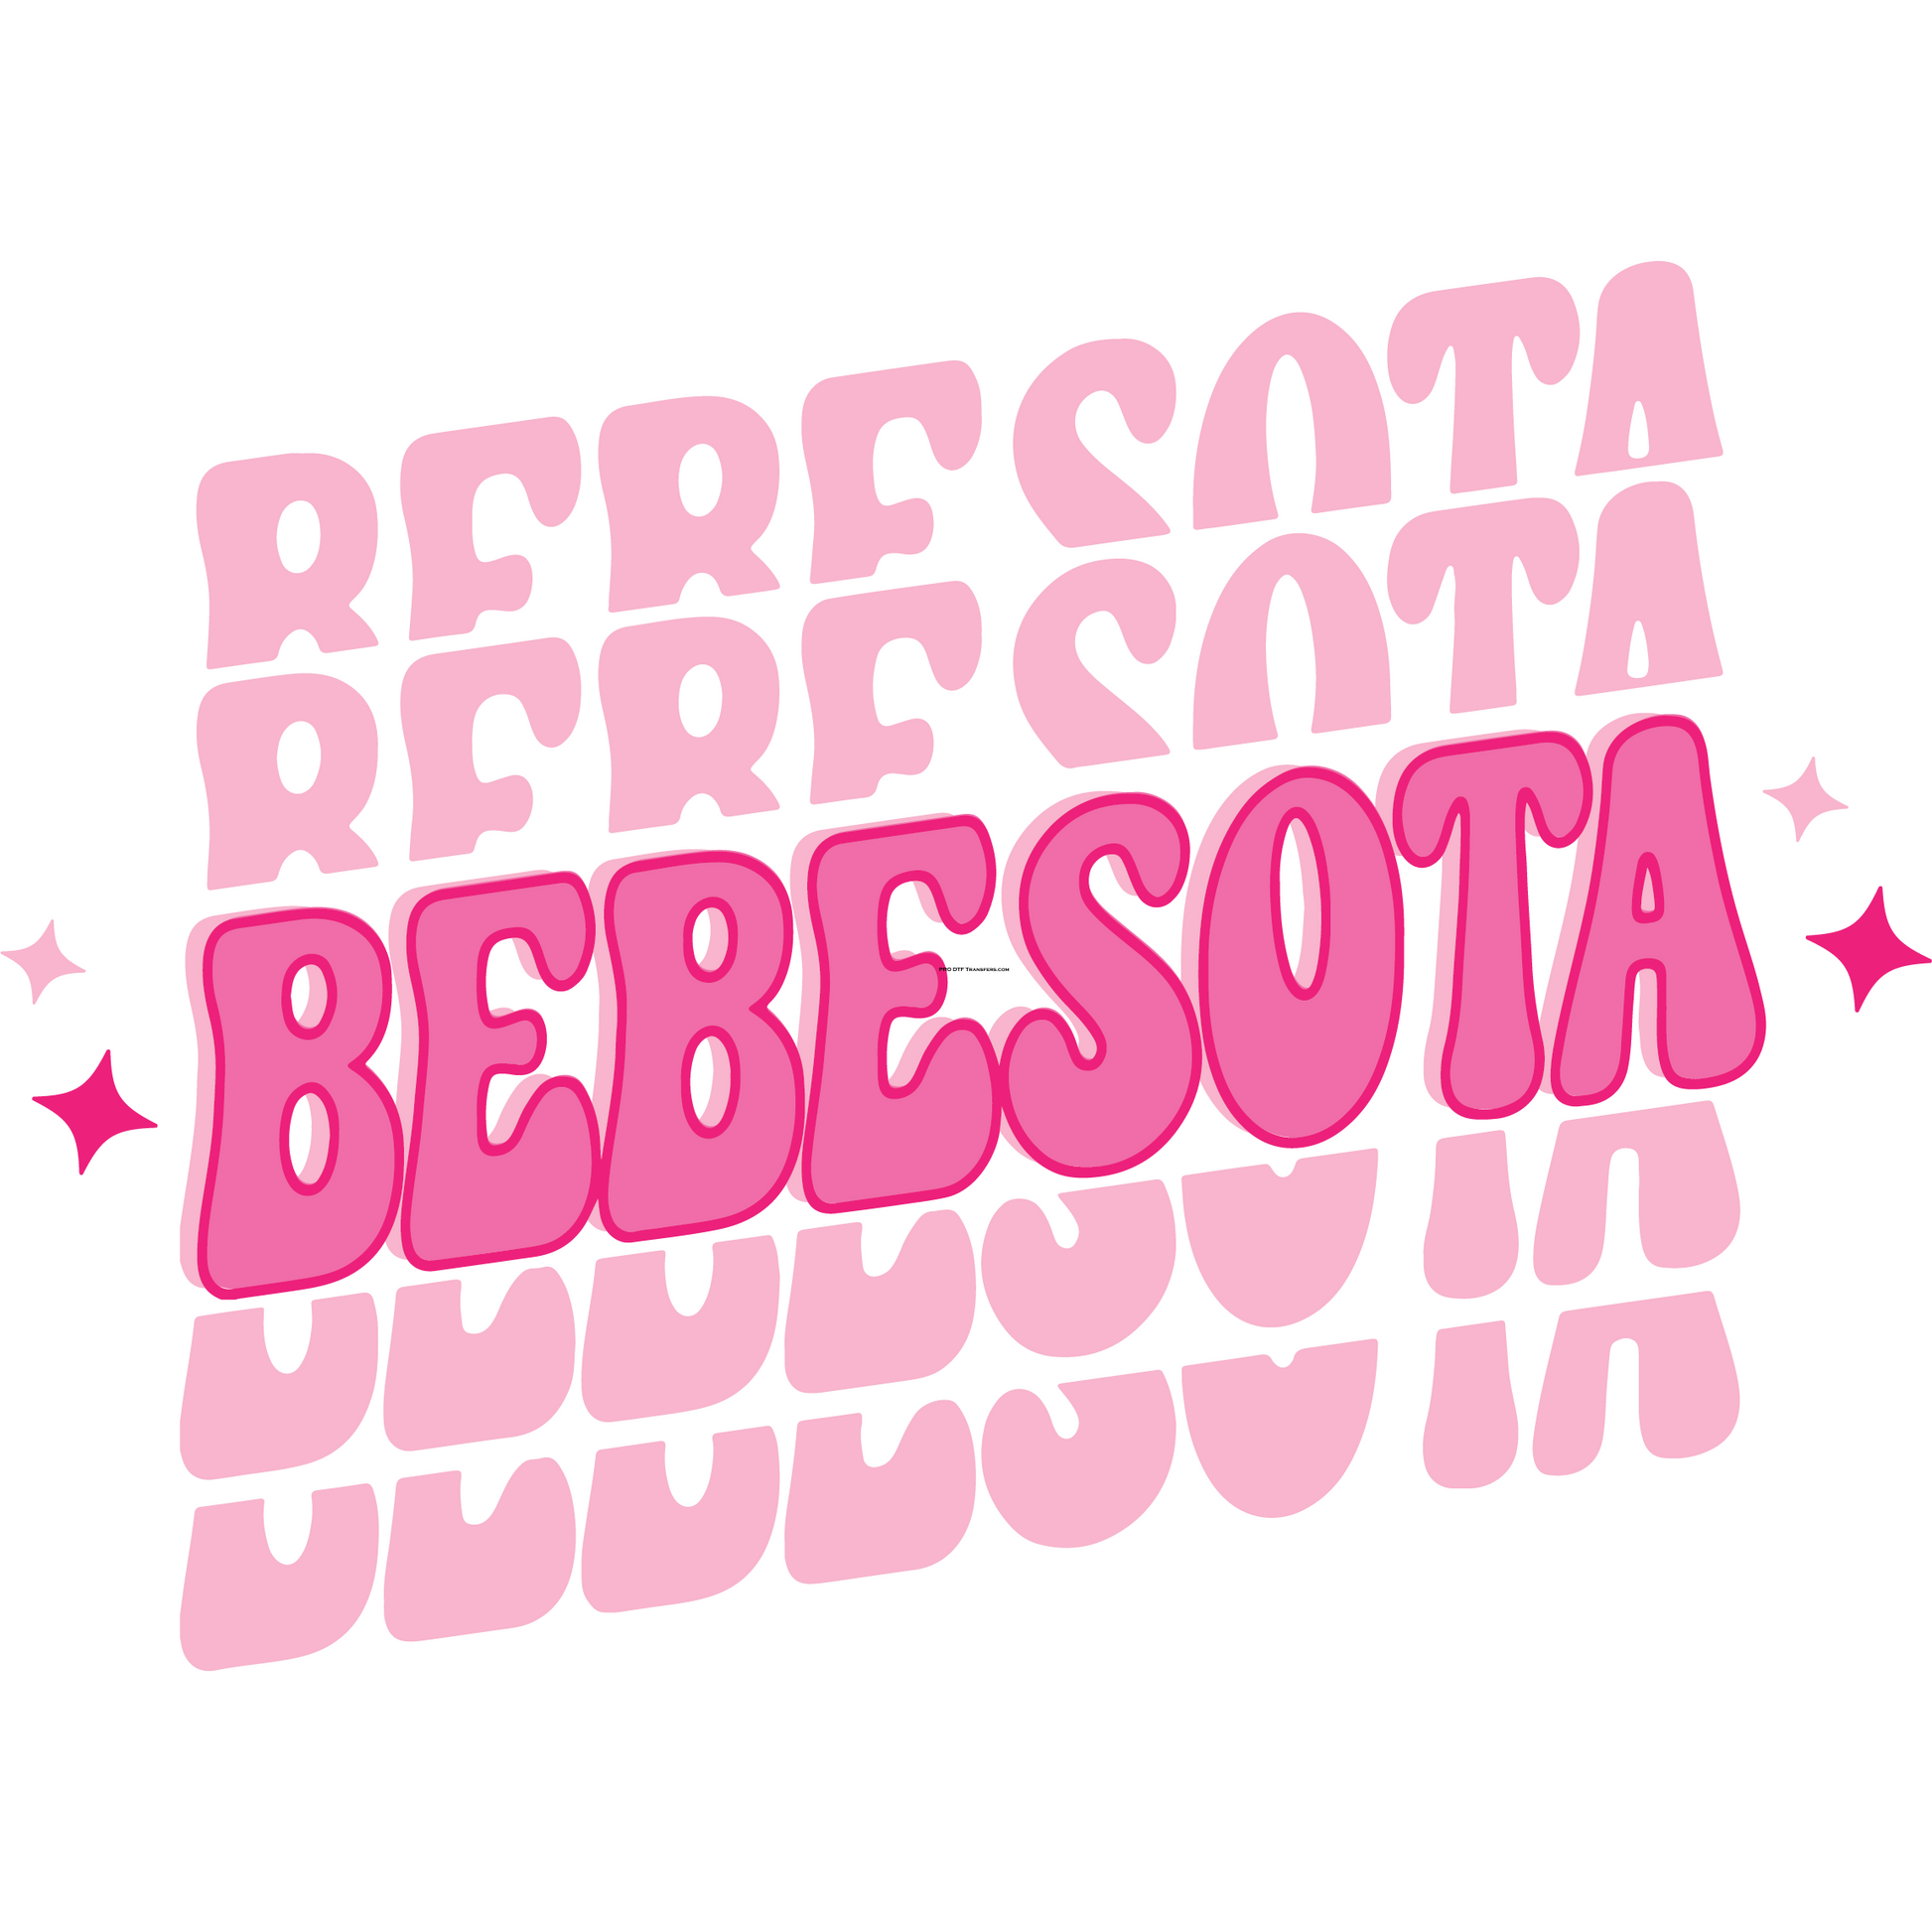 Bebesota Retro Full Color Transfer - Pro DTF Transfers